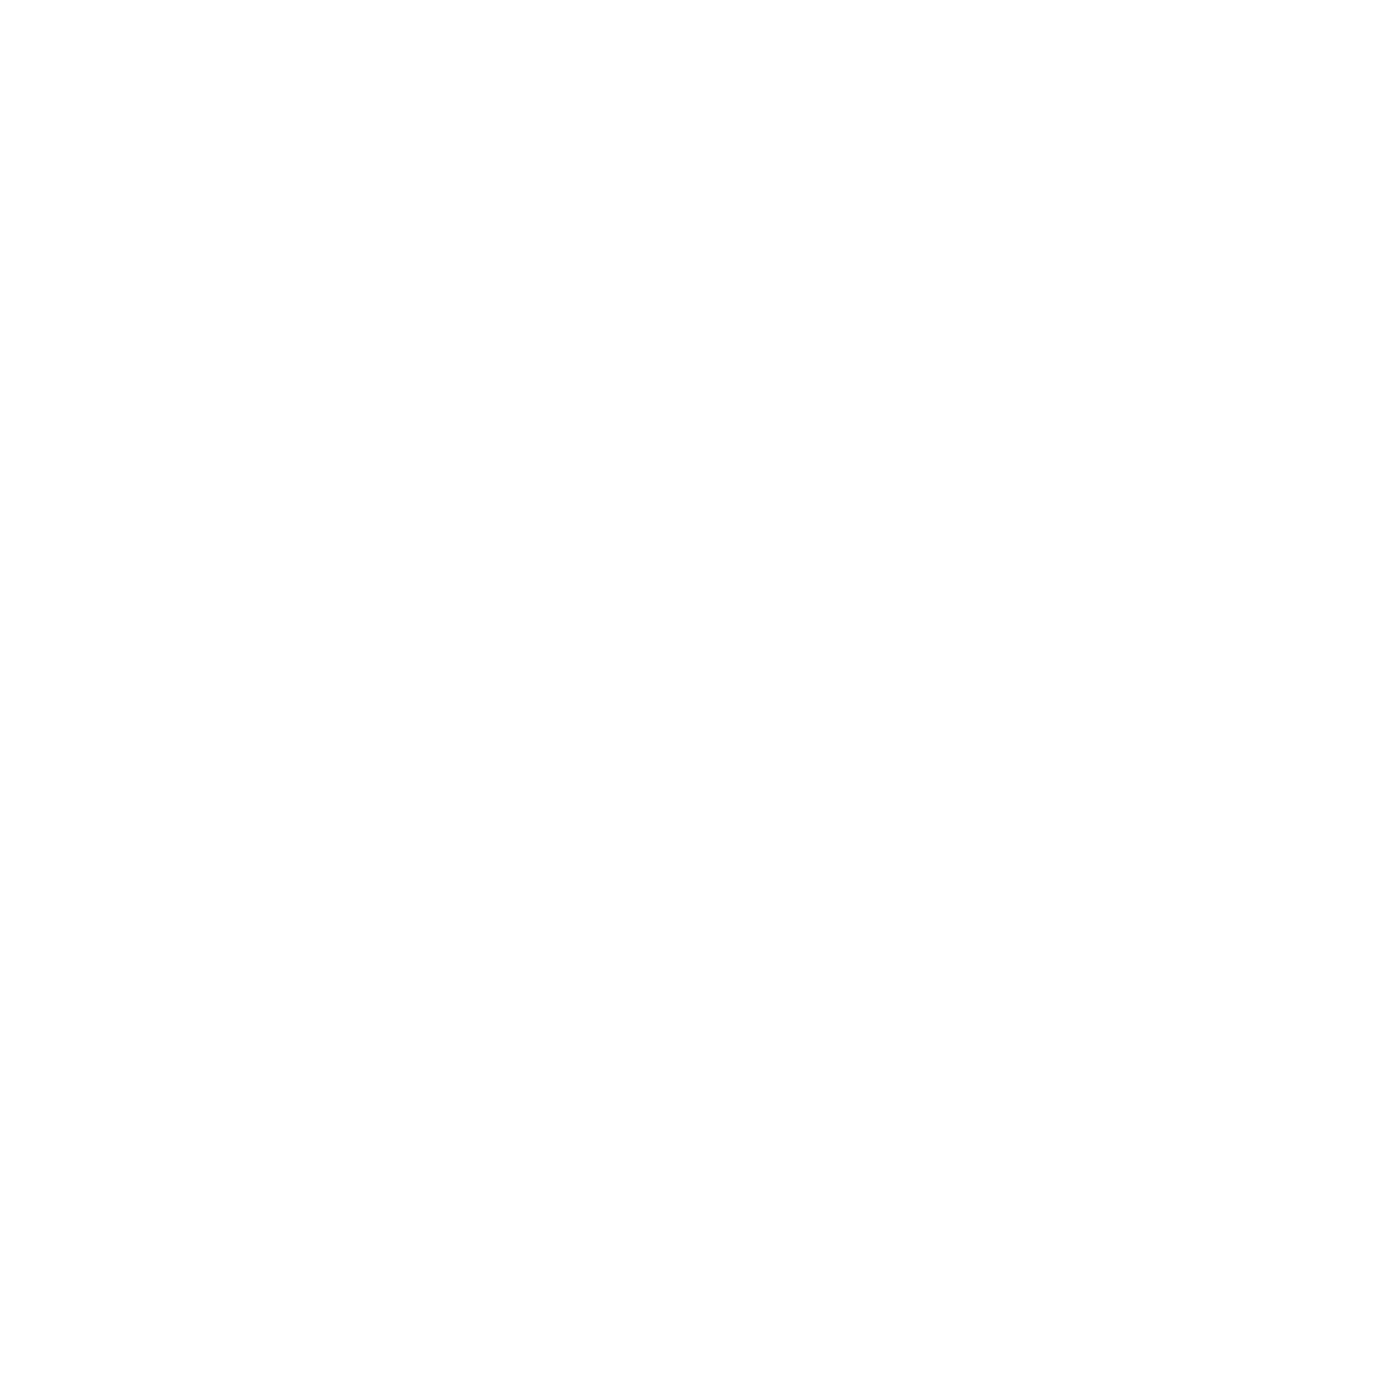 Cosmo City Church